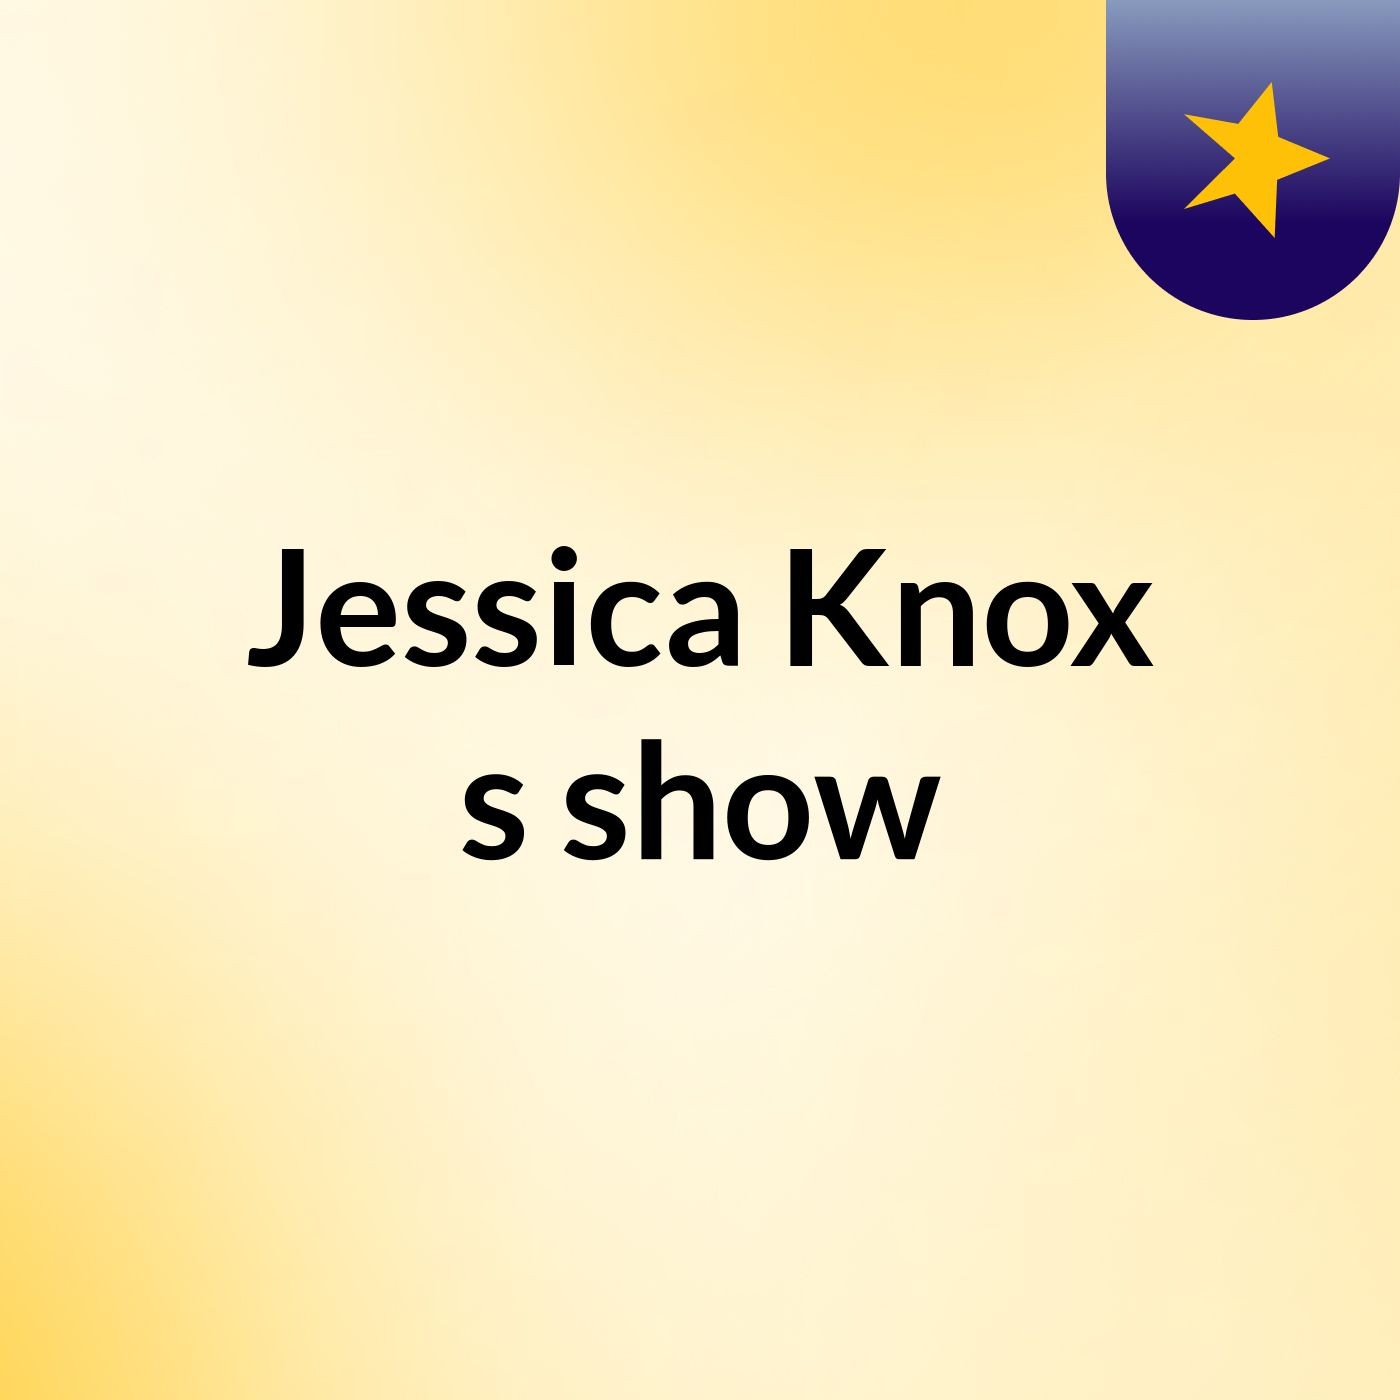 Jessica Knox's show